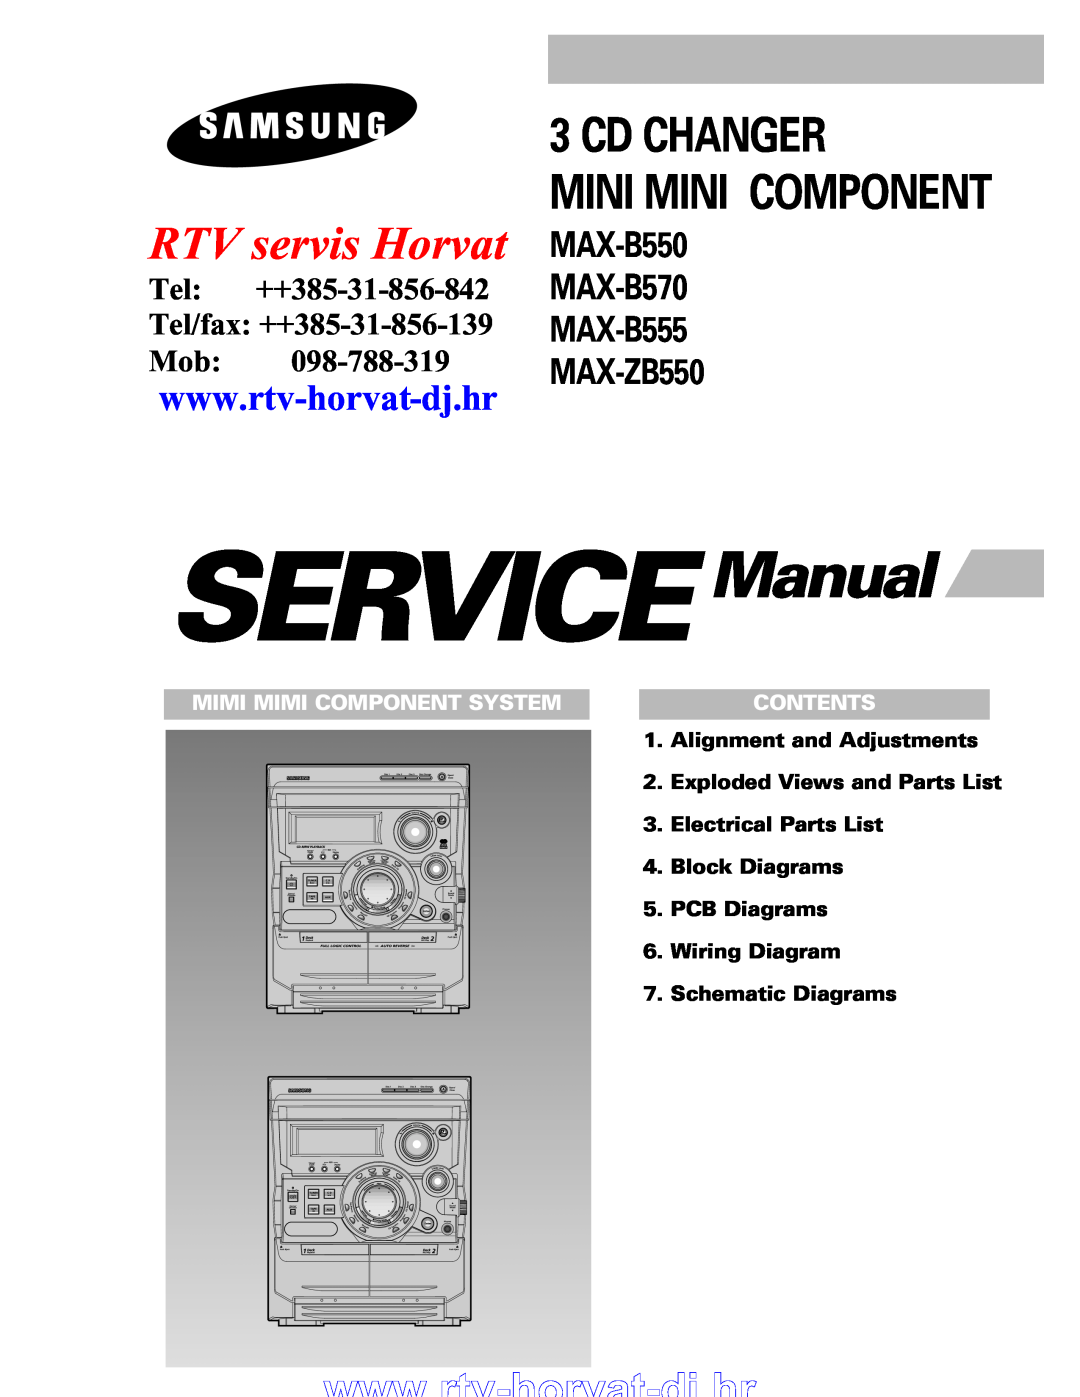 Samsung service manual Cd Changer Mini Mini Component, RTV servis Horvat, MAX-B550 MAX-B570 MAX-B555 MAX-ZB550, Mob 